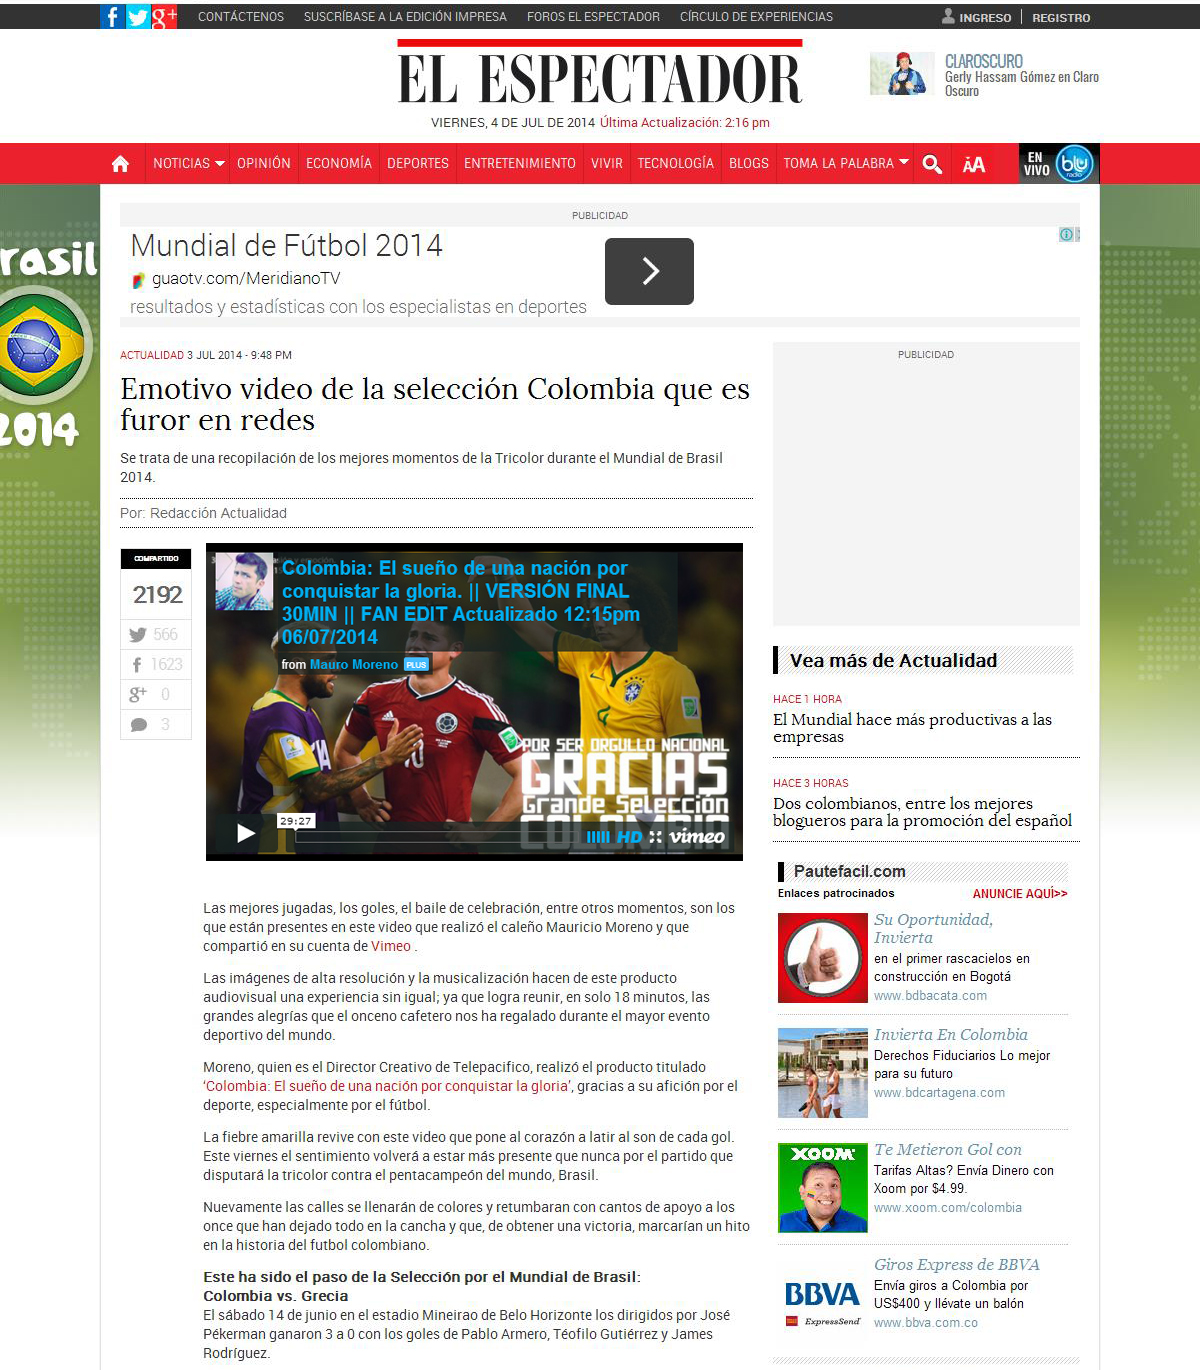 the website for el espectador